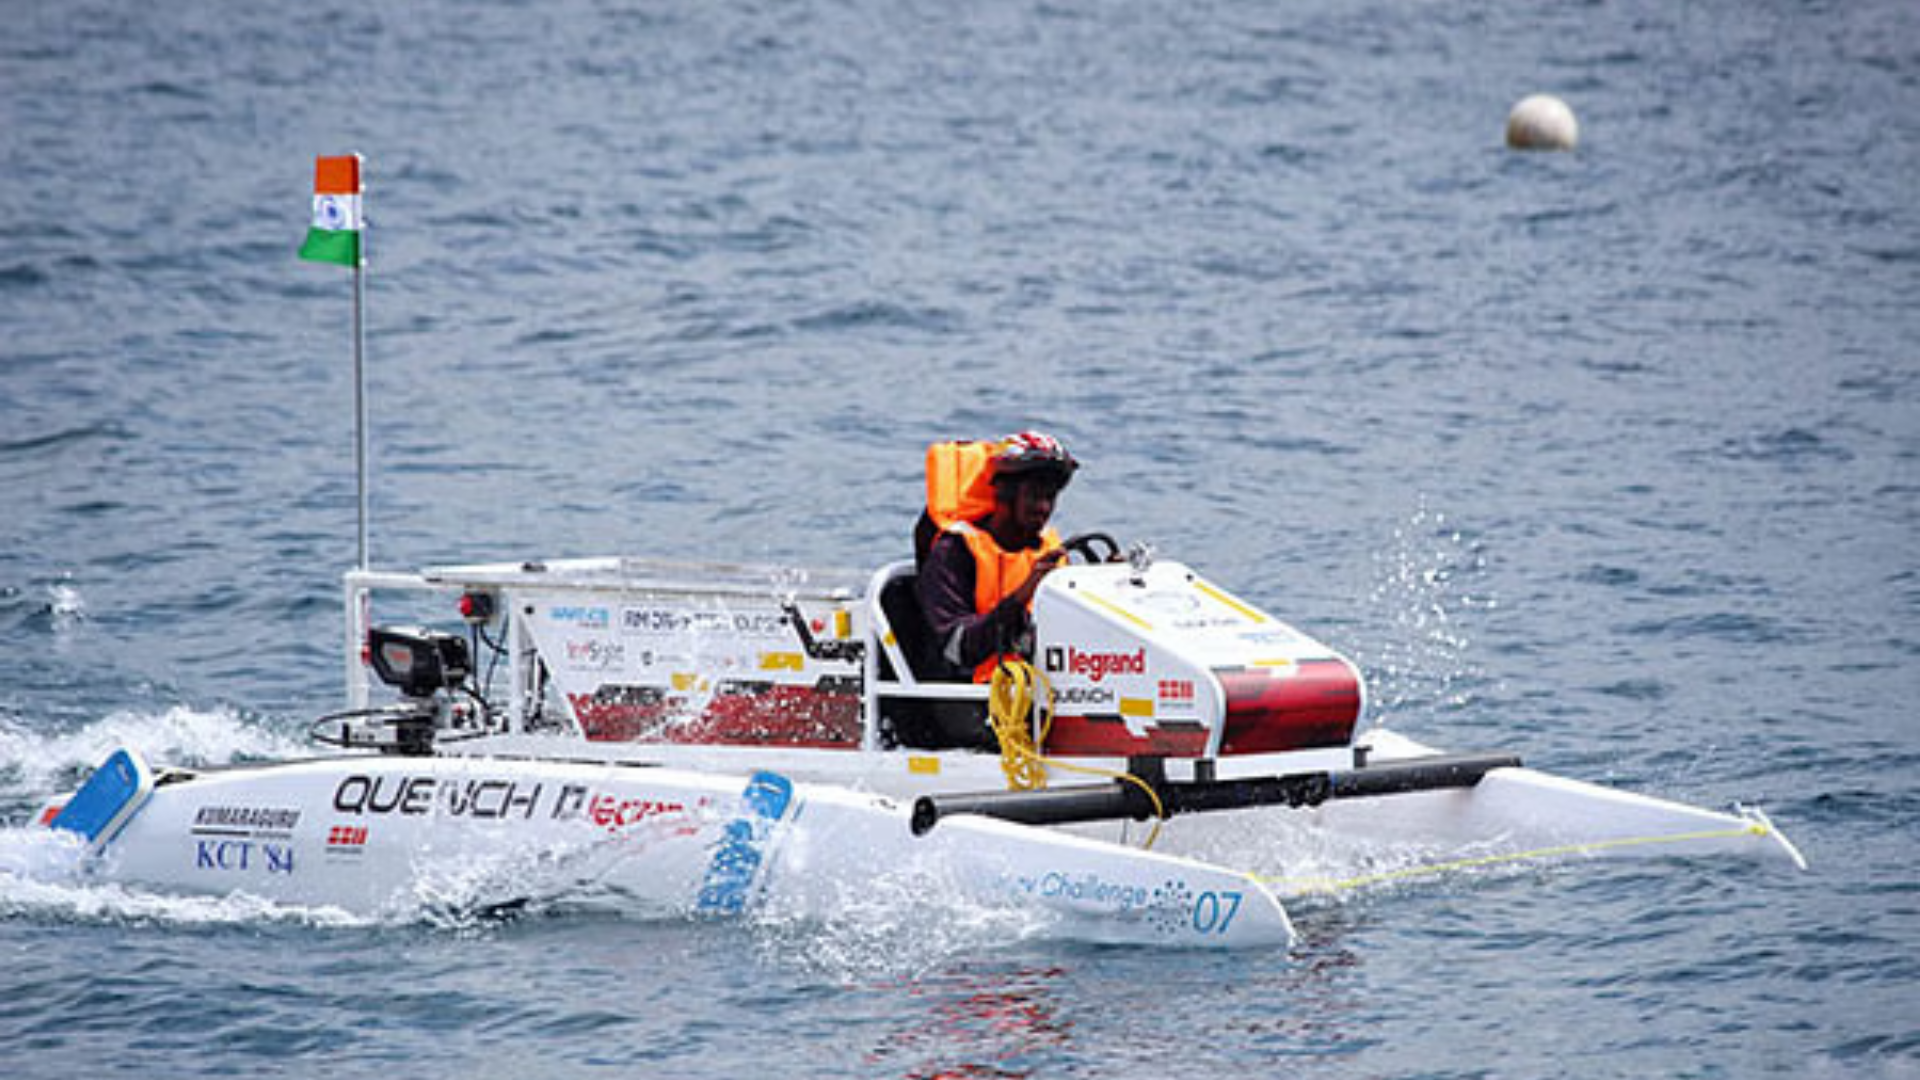 Team Sea Shakti Wins Three Award At The 11th Monaco Energy Boat Challenge, Breaks Record